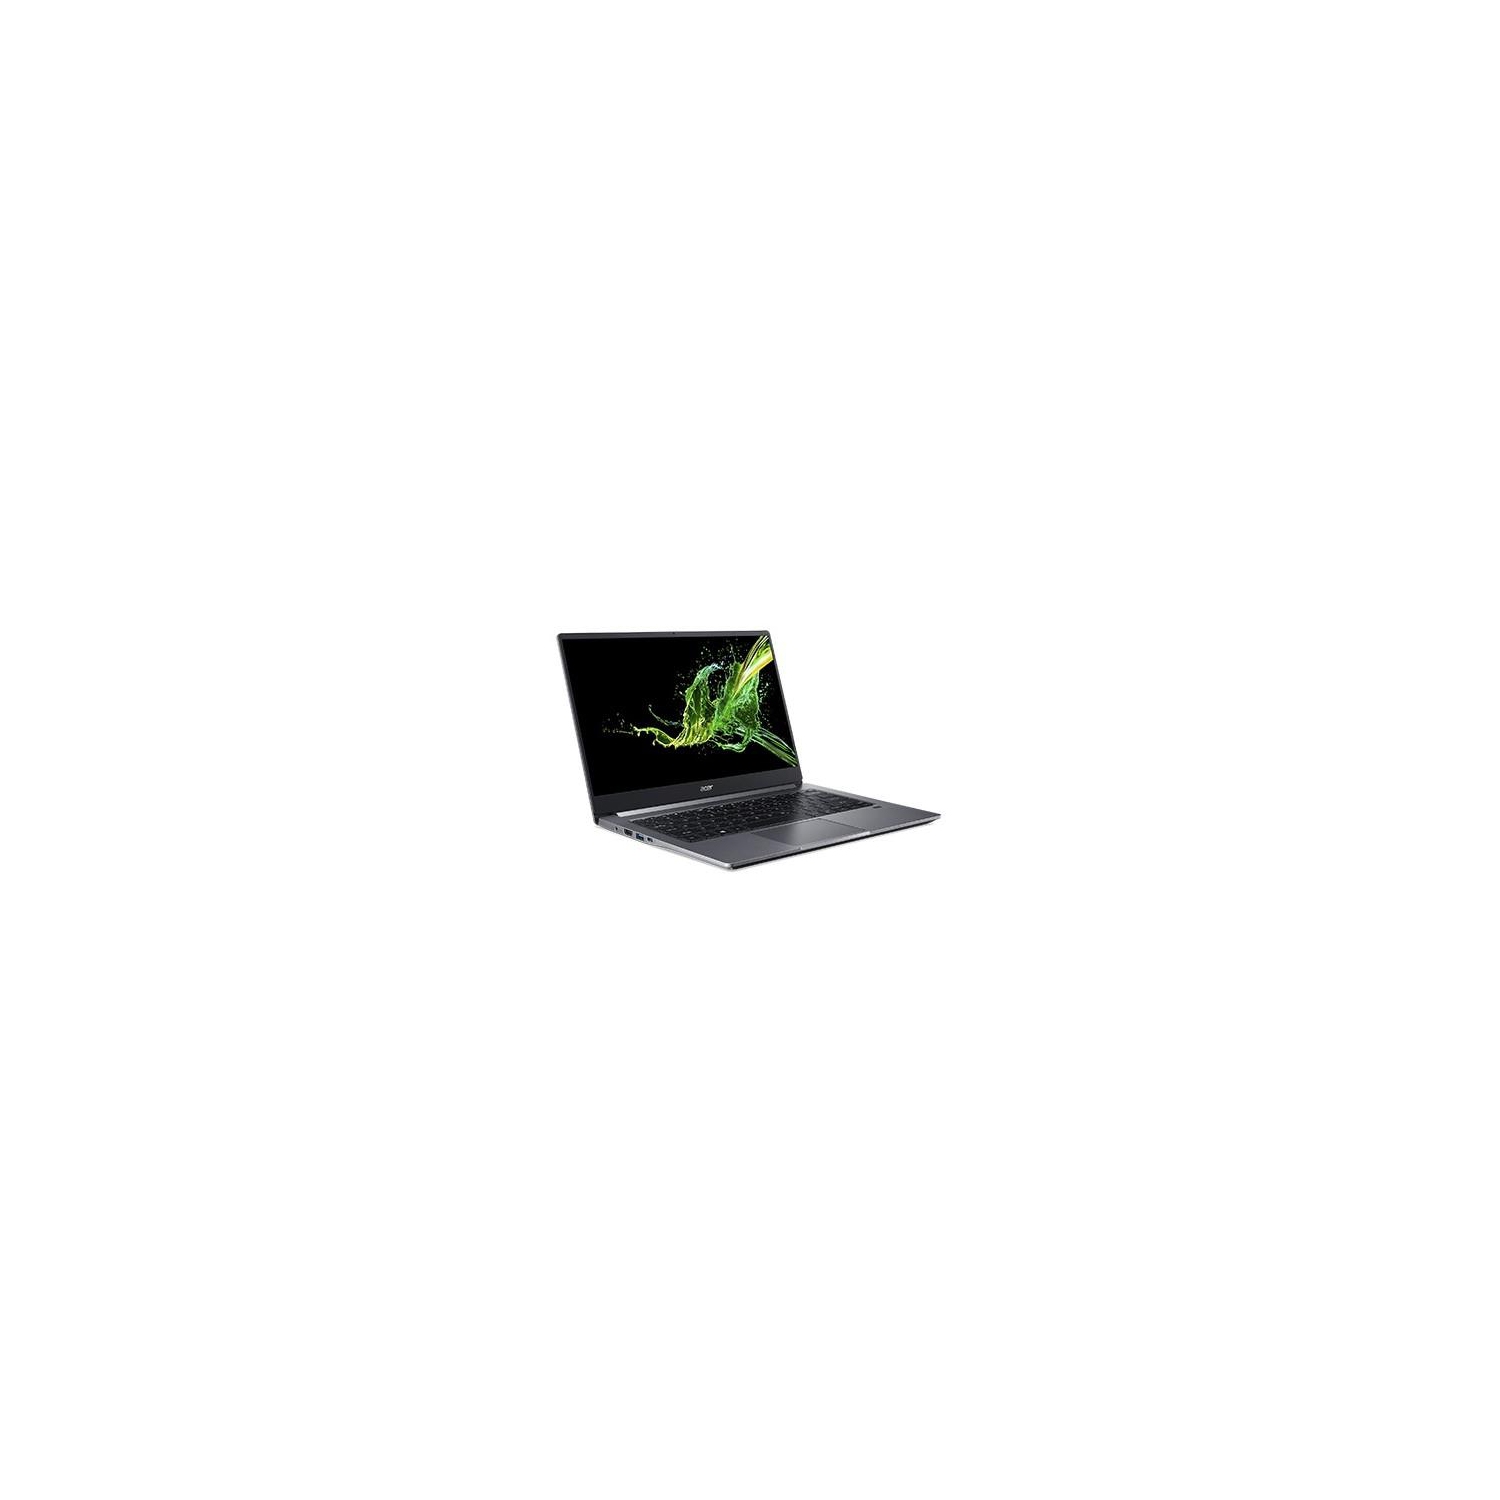 Refurbished Good - Acer Swift 3 SF314-57-563Z 14” Laptop with Intel® i5-1035G1, 256GB SSD, 8GB RAM & Windows 10 Home - Black